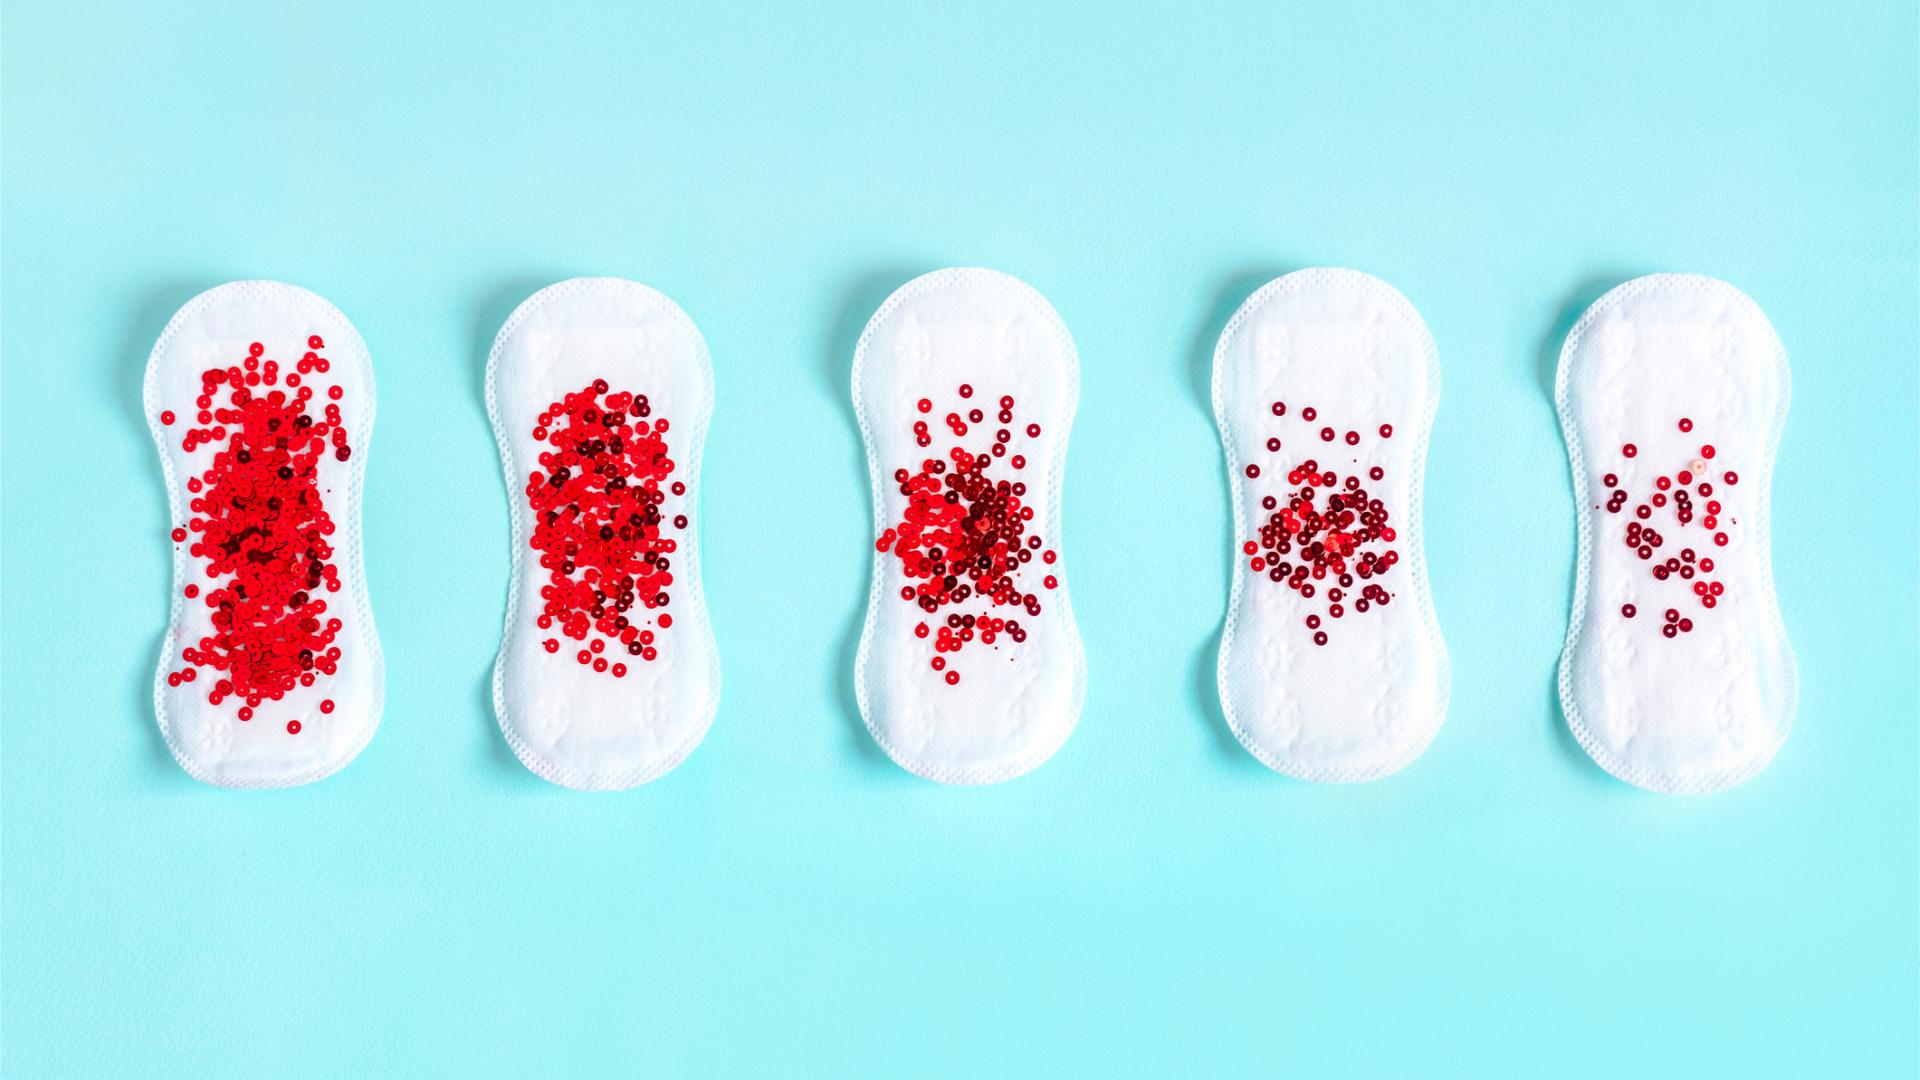 Free Bleeding Menstruation Binde Periode